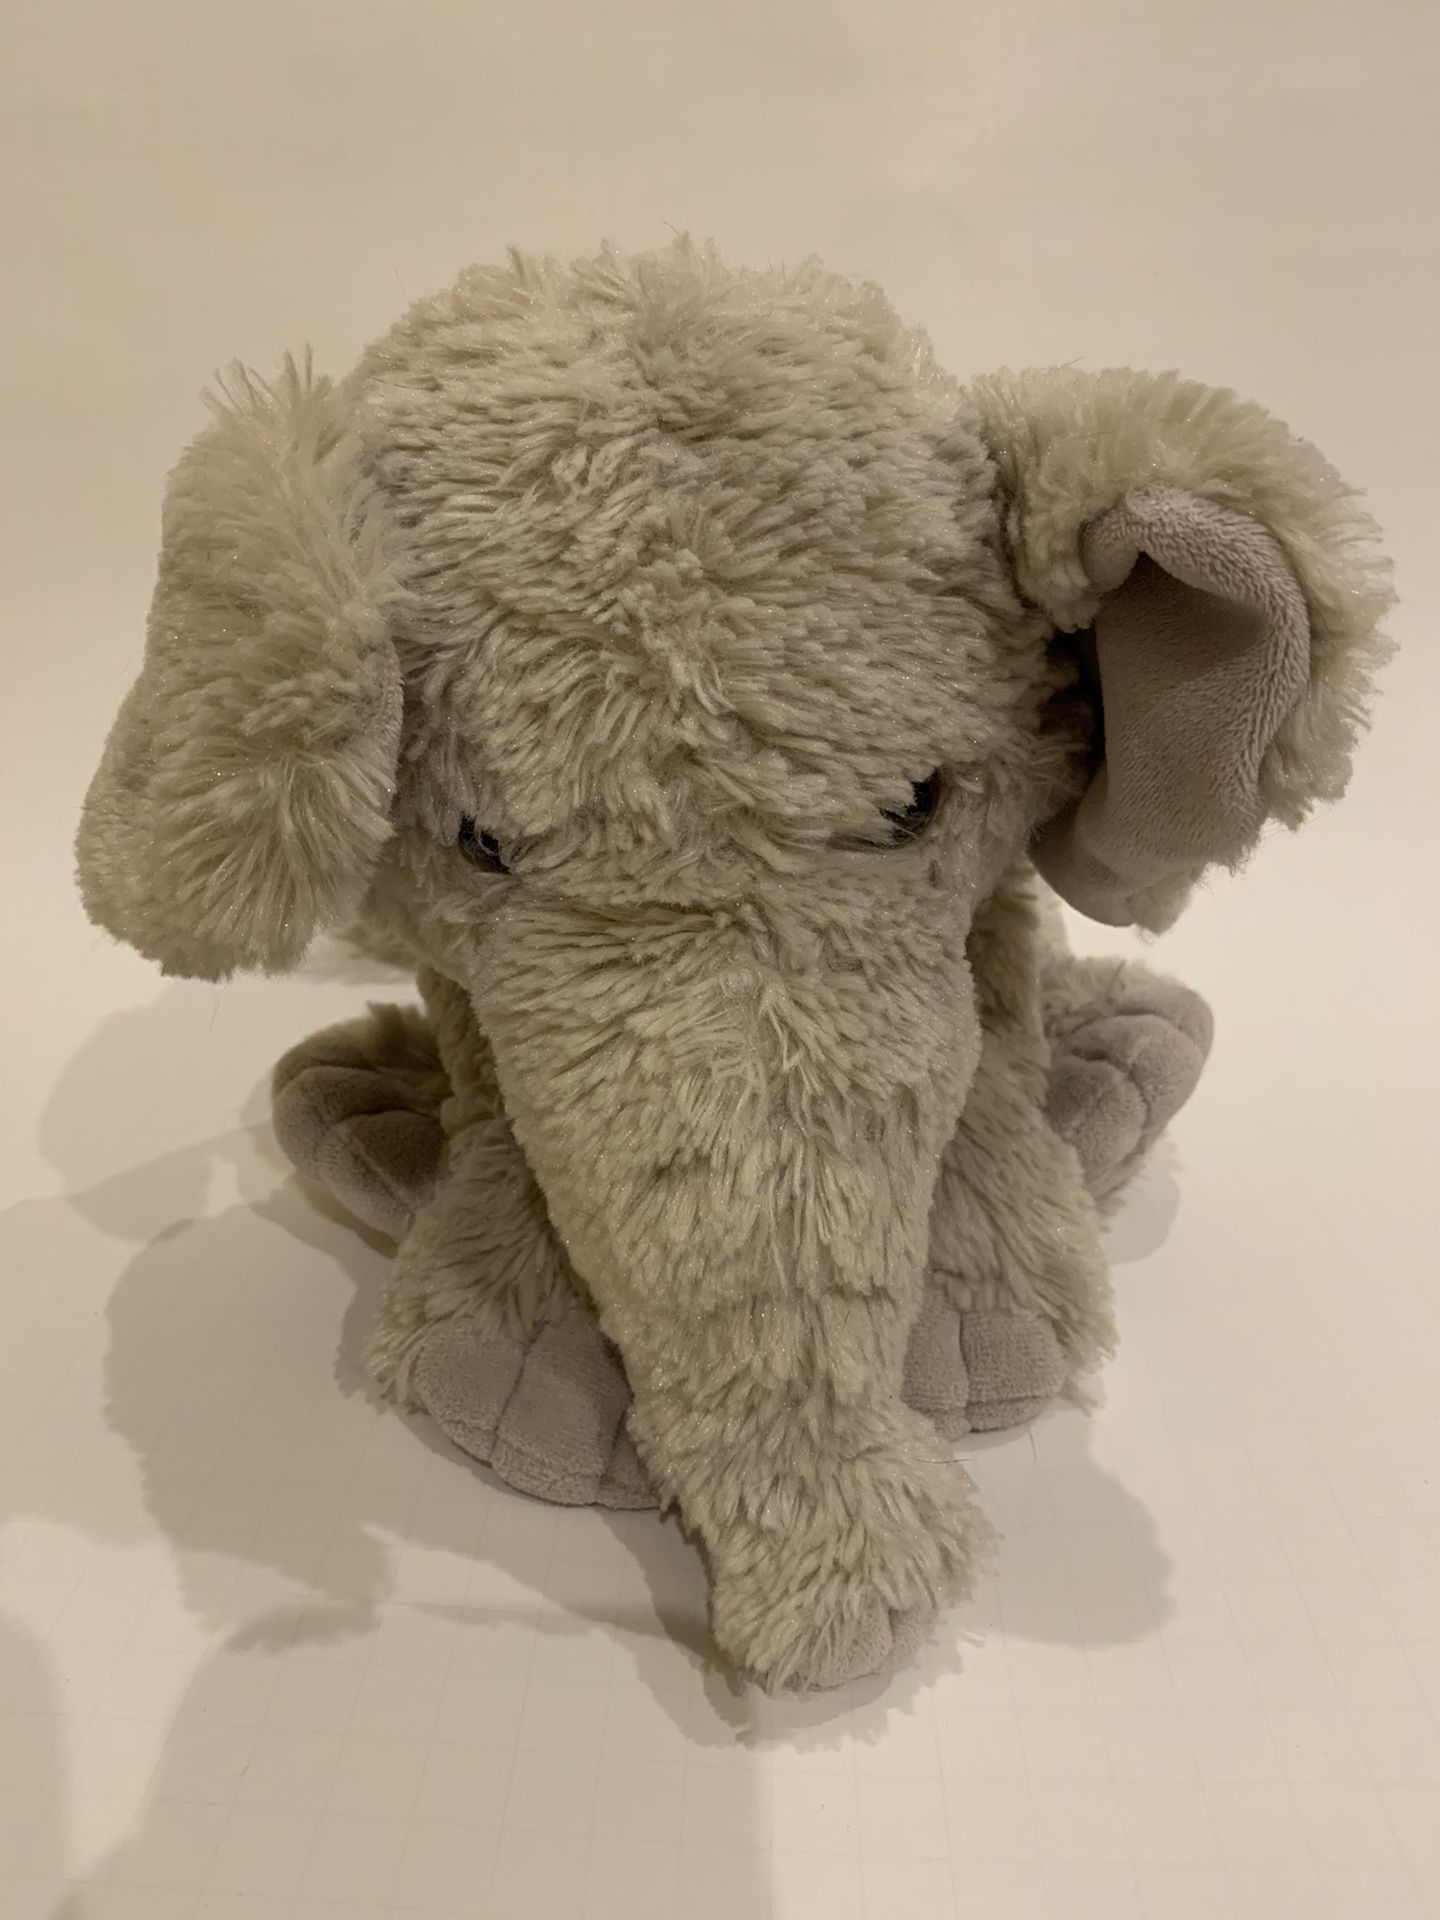 Stuffed elephant, 11 inch, animal planet